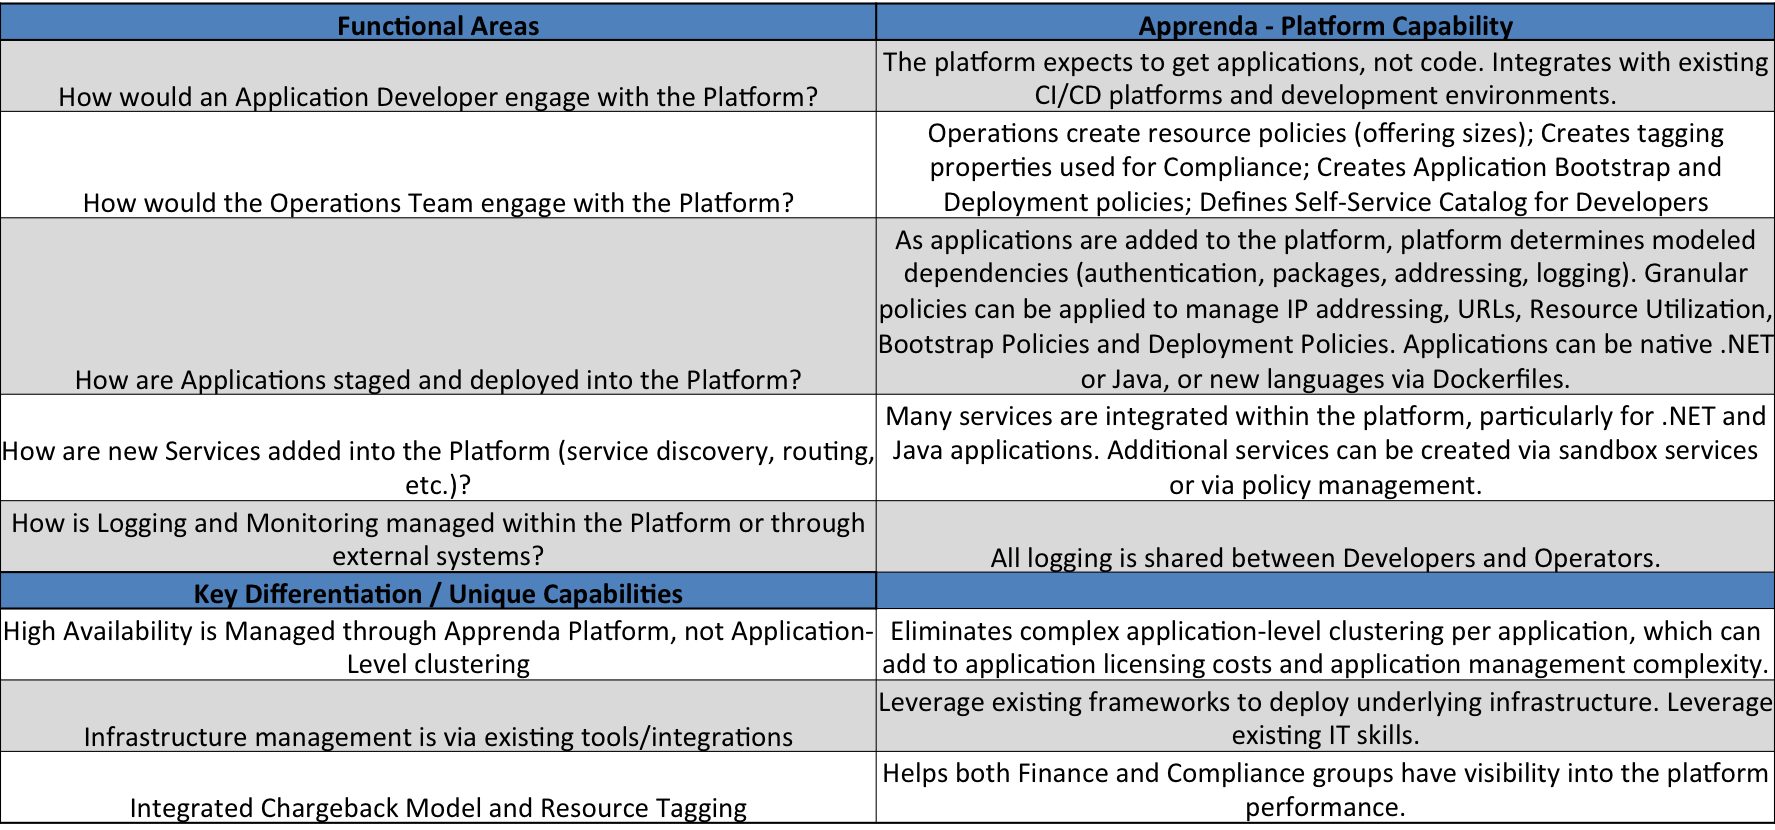 Table 6: Apprenda Platform 